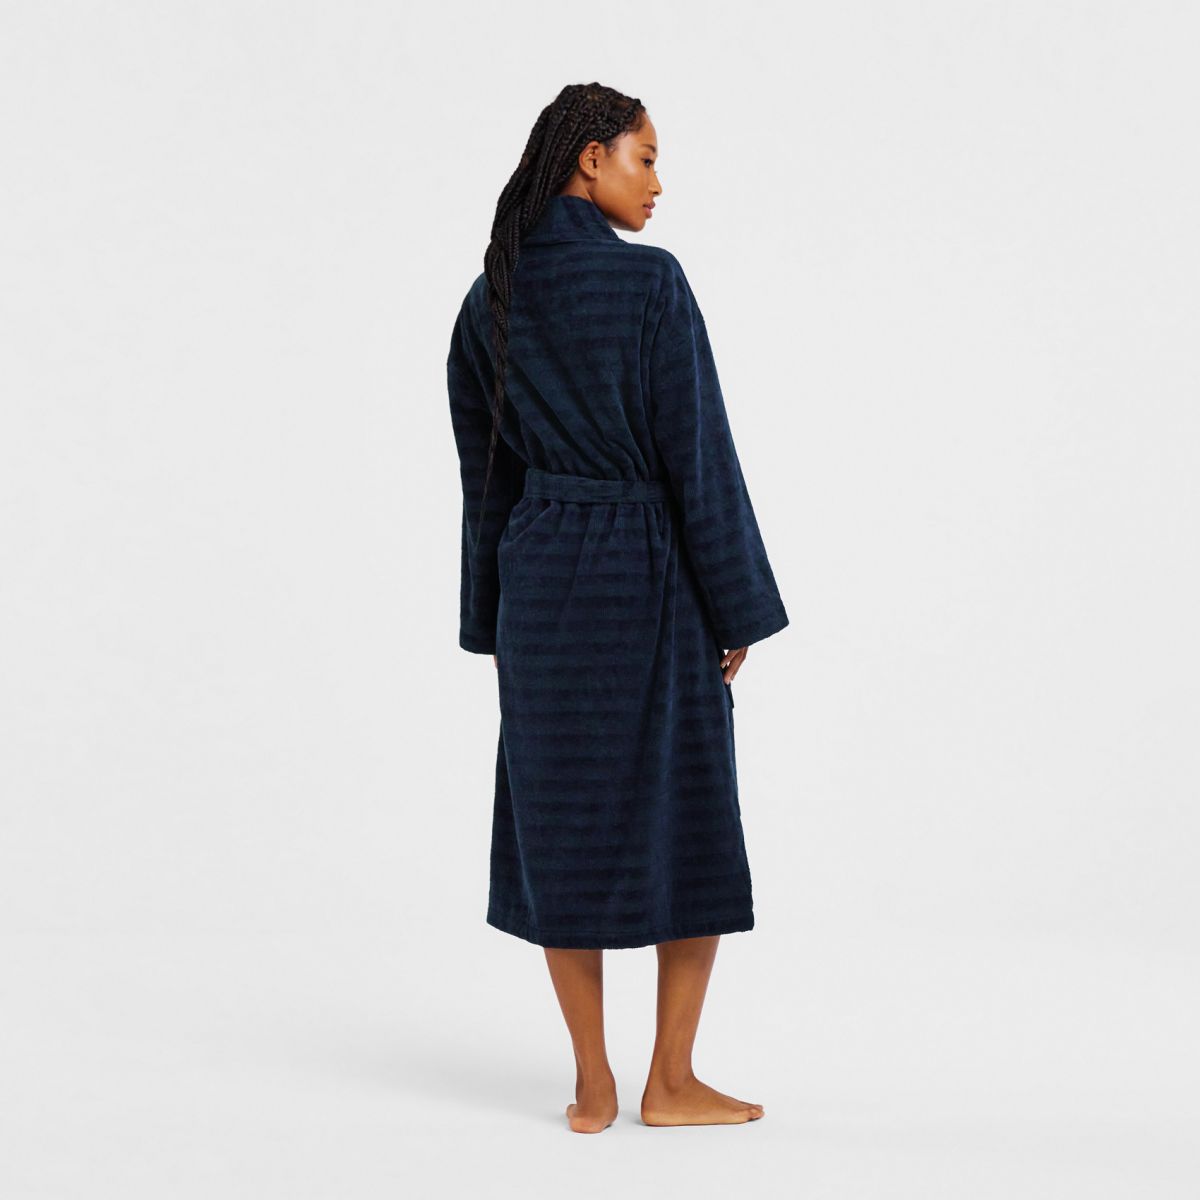 DOOWELL Women's Knit Robes Lightweight Absorbent Soft Spa Bathrobe at  Amazon Women's Clothing store